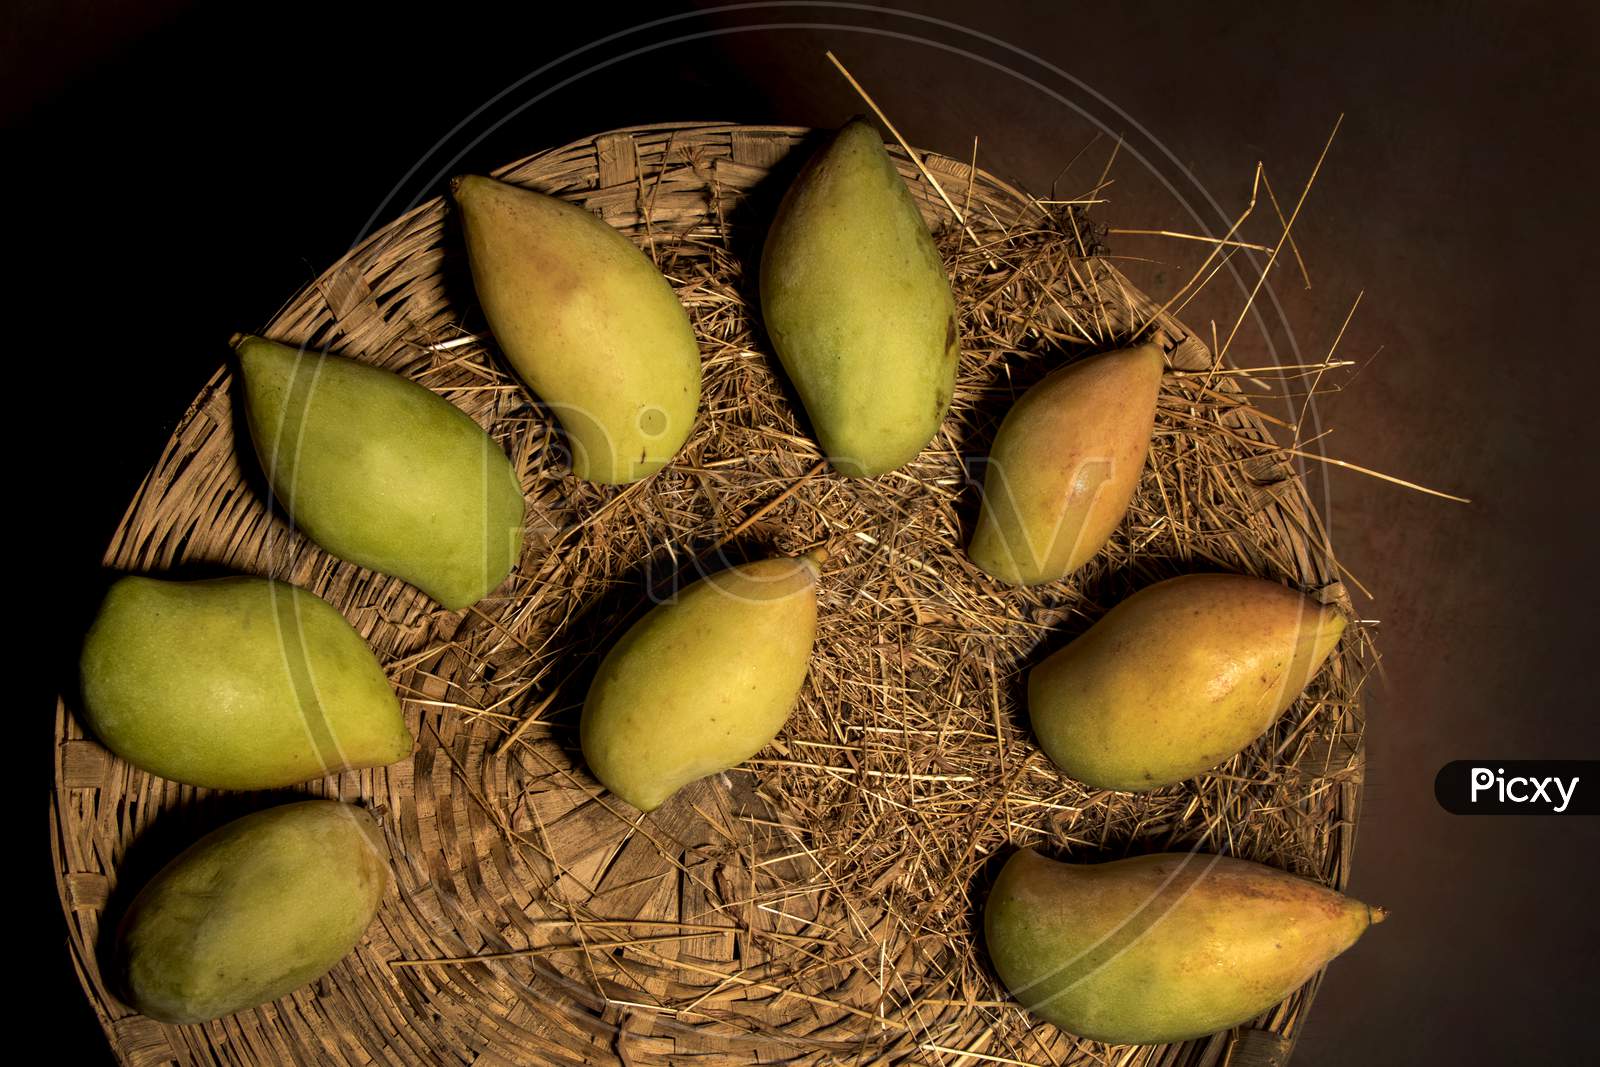 Mangoes Arrangement in Basket